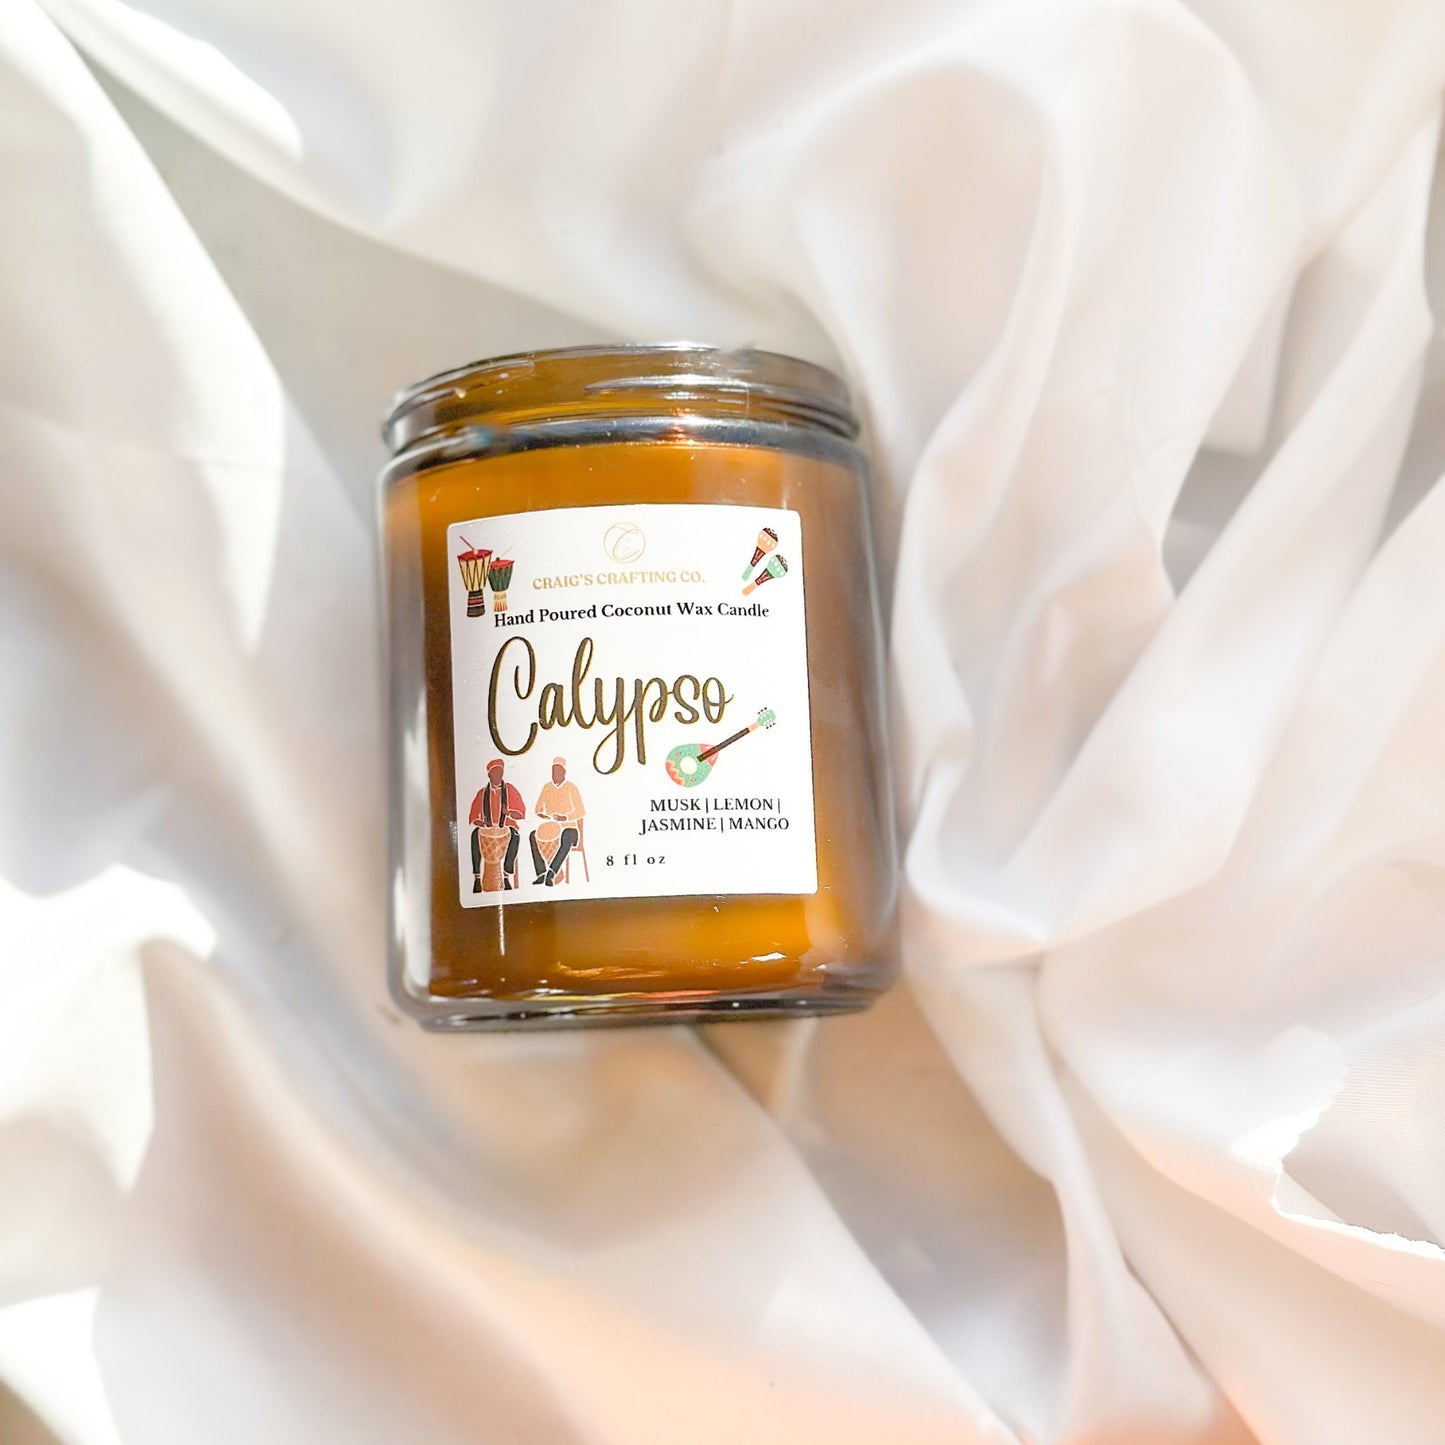 Calypso - Craig’s Crafting Co.